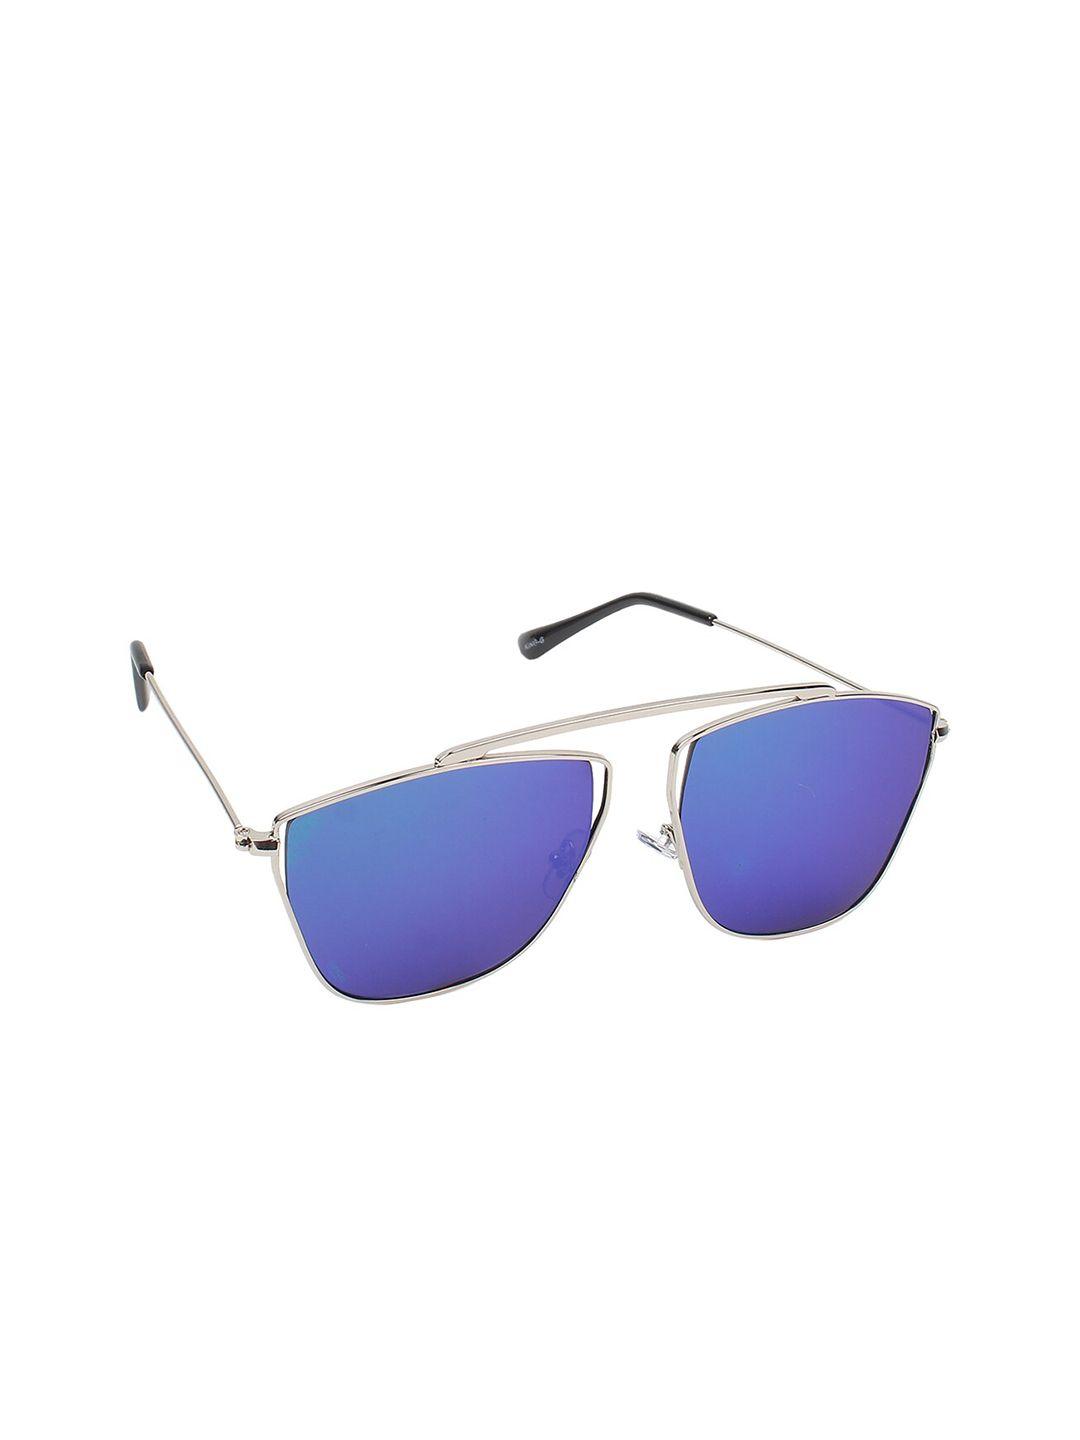 swiss design unisex purple aviator sunglasses